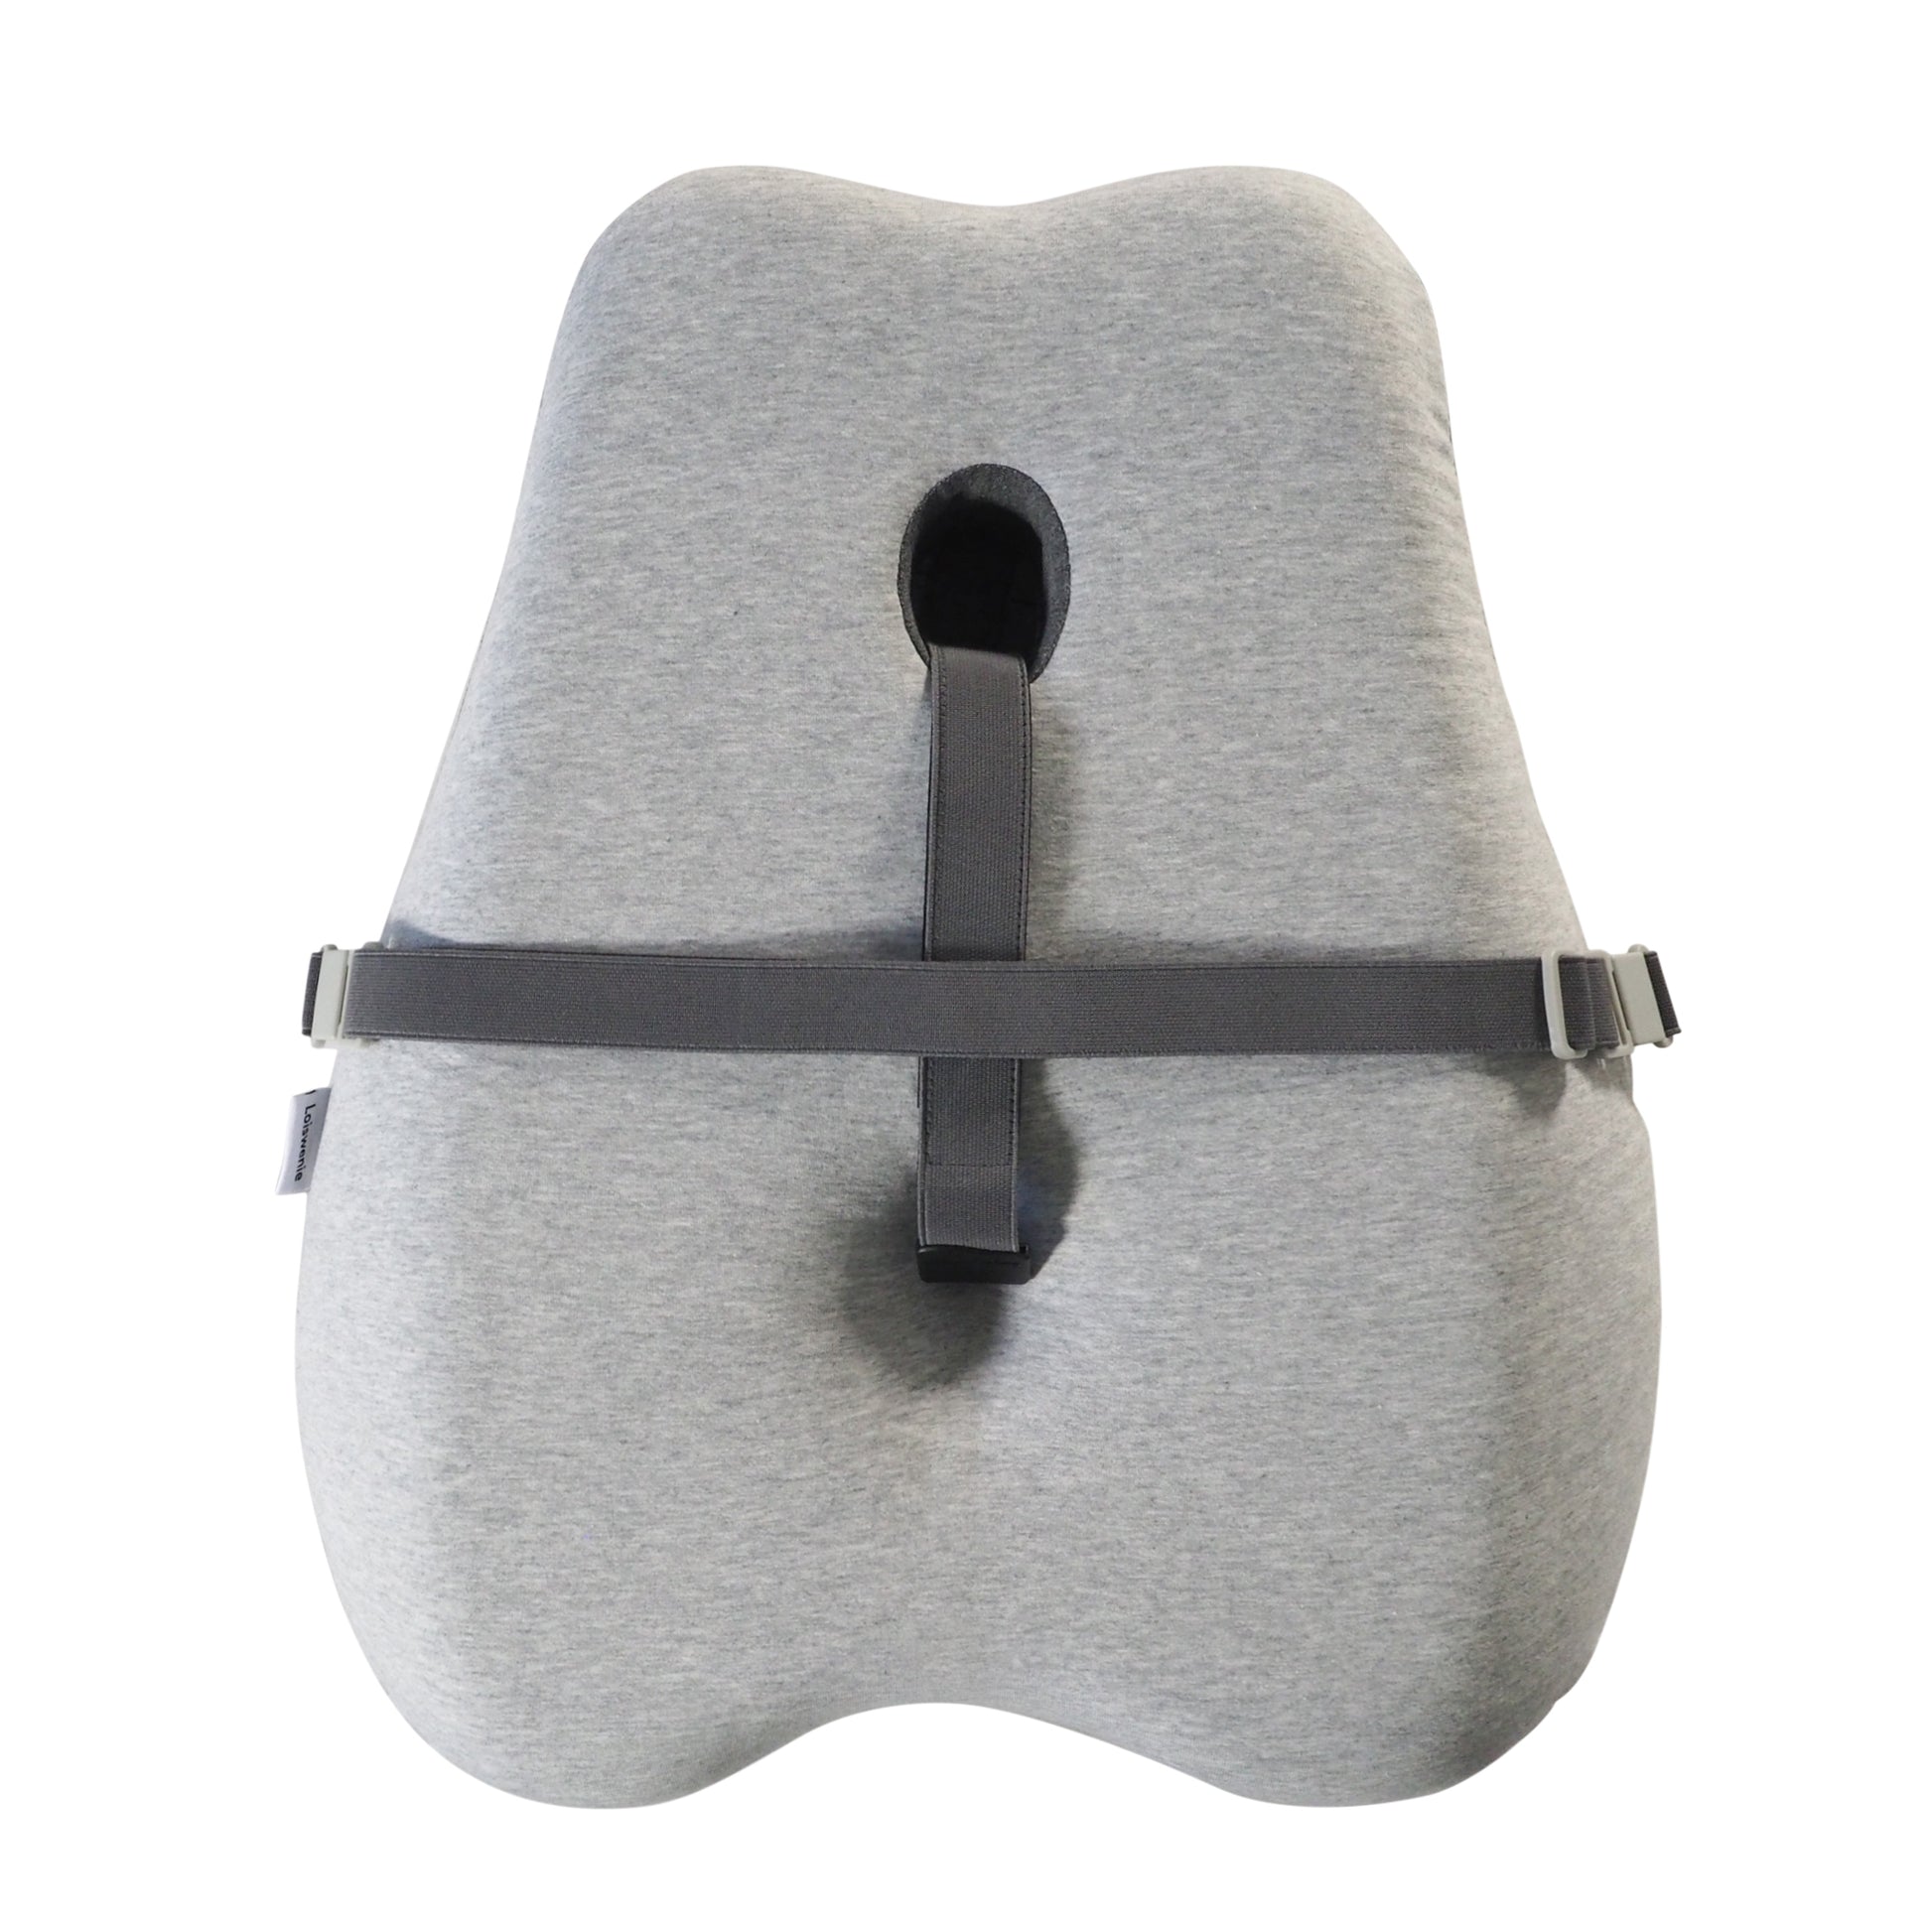 Ergonomic Lumbar Support Cushion